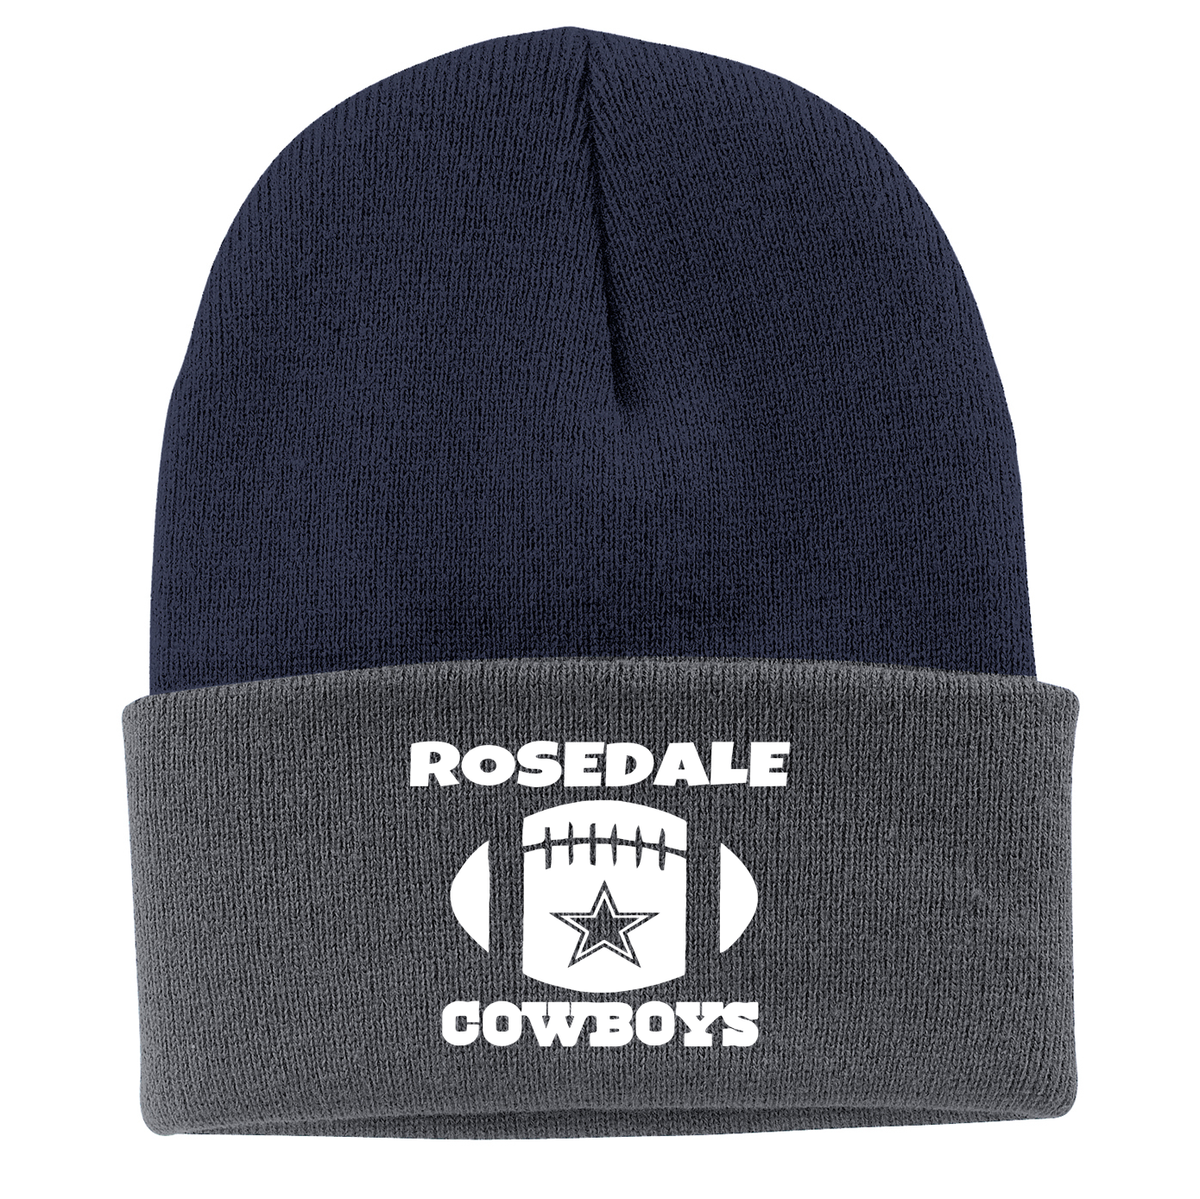 Rosedale Cowboys Knit Beanie